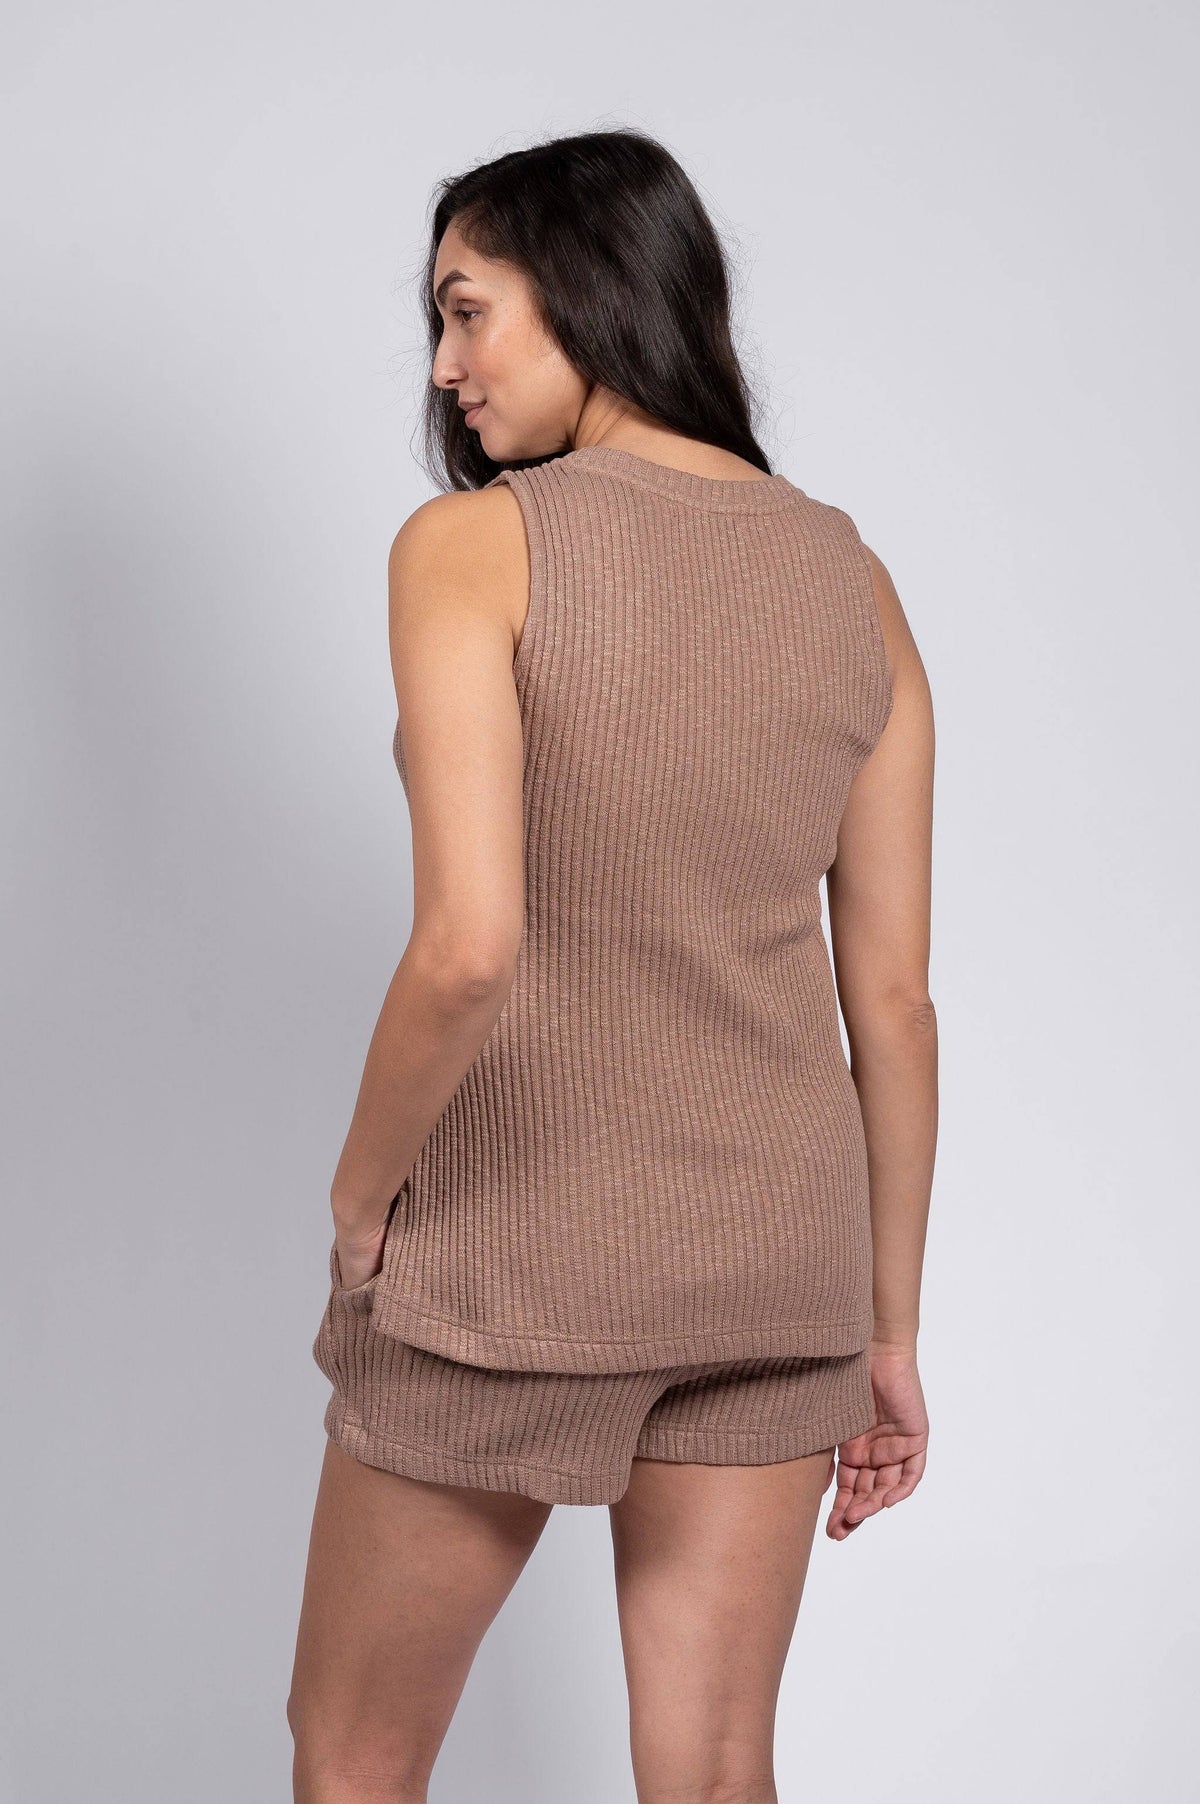 Sweater Rib Knit Tank - LATTELOVE Co.